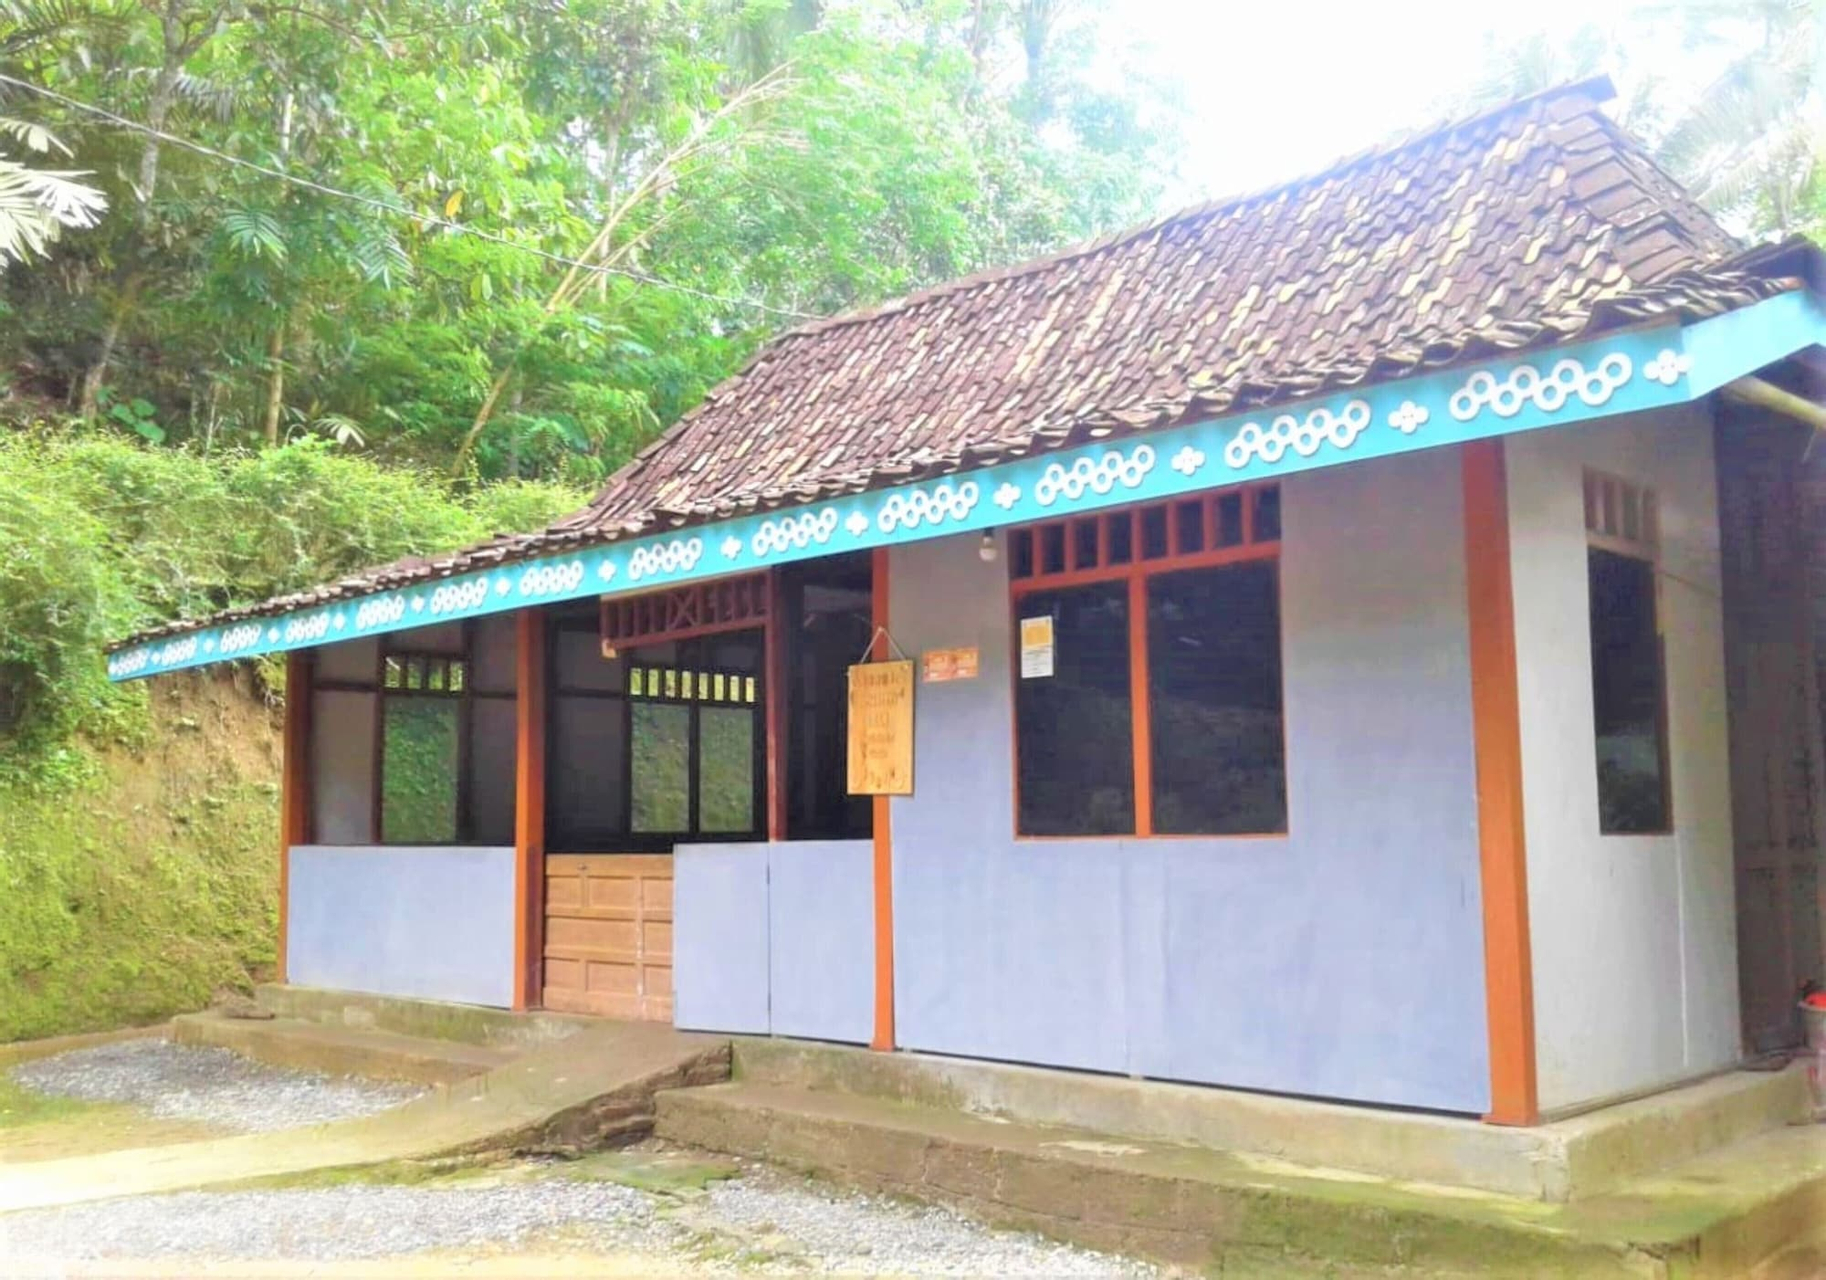 Exterior & Views, Setren Opak Camping Resort, Bantul